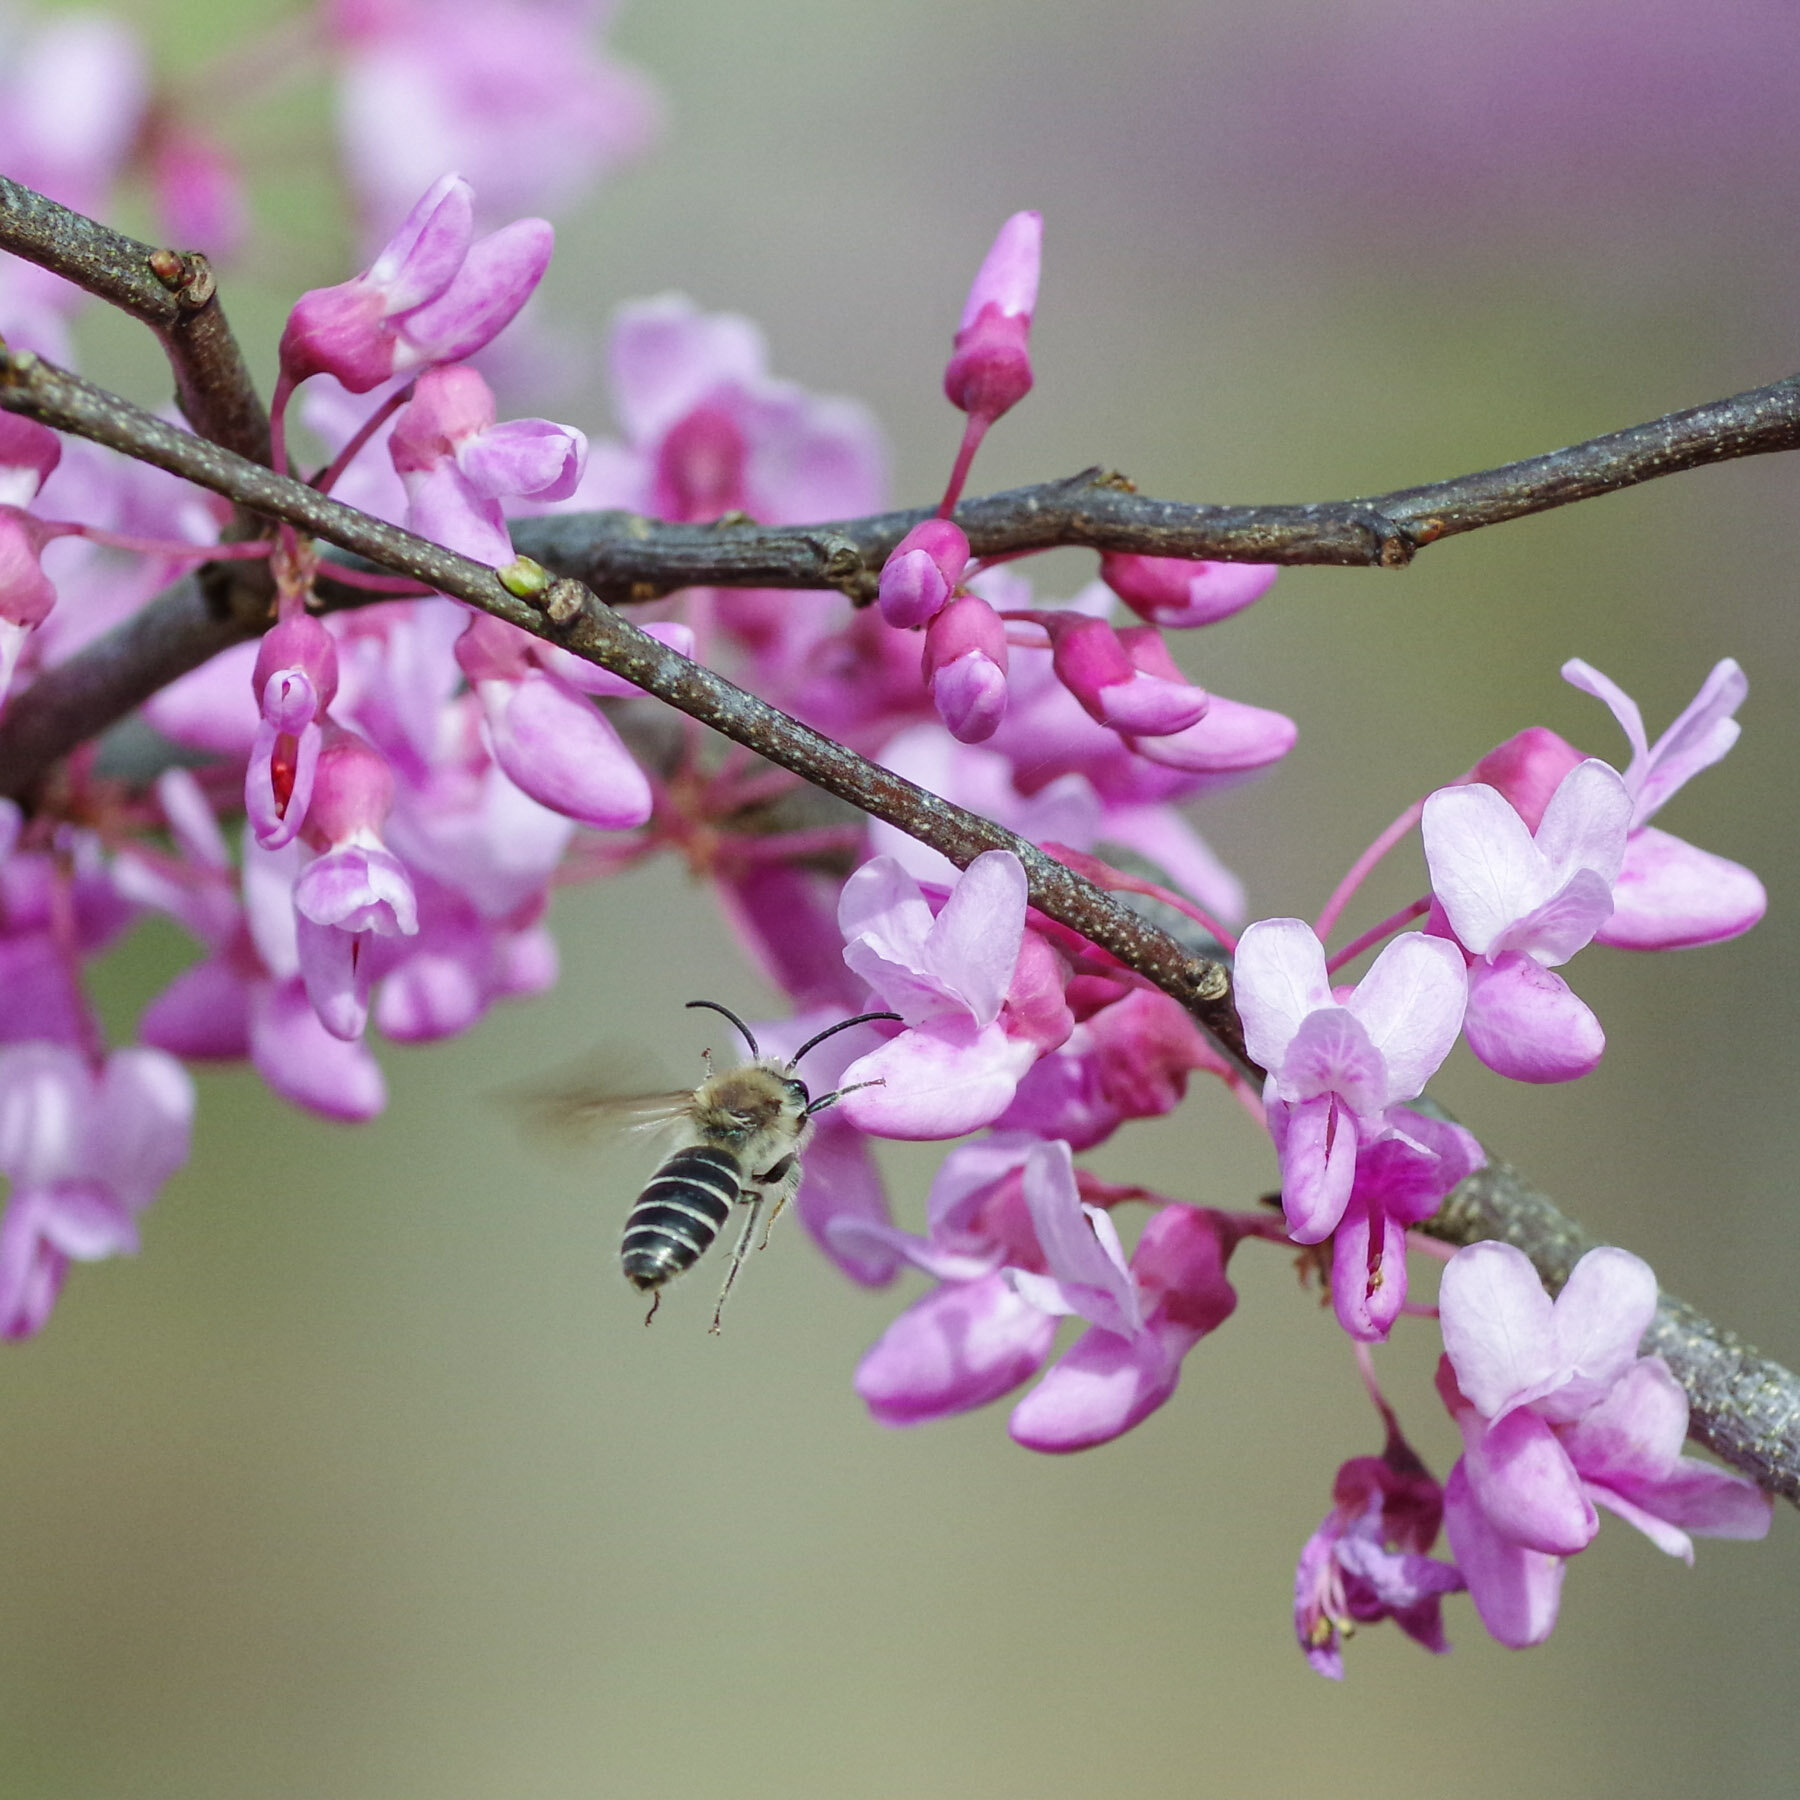 03-21-21 Spring pink redbud tree blooms Barrett Park 002 bee.jpeg